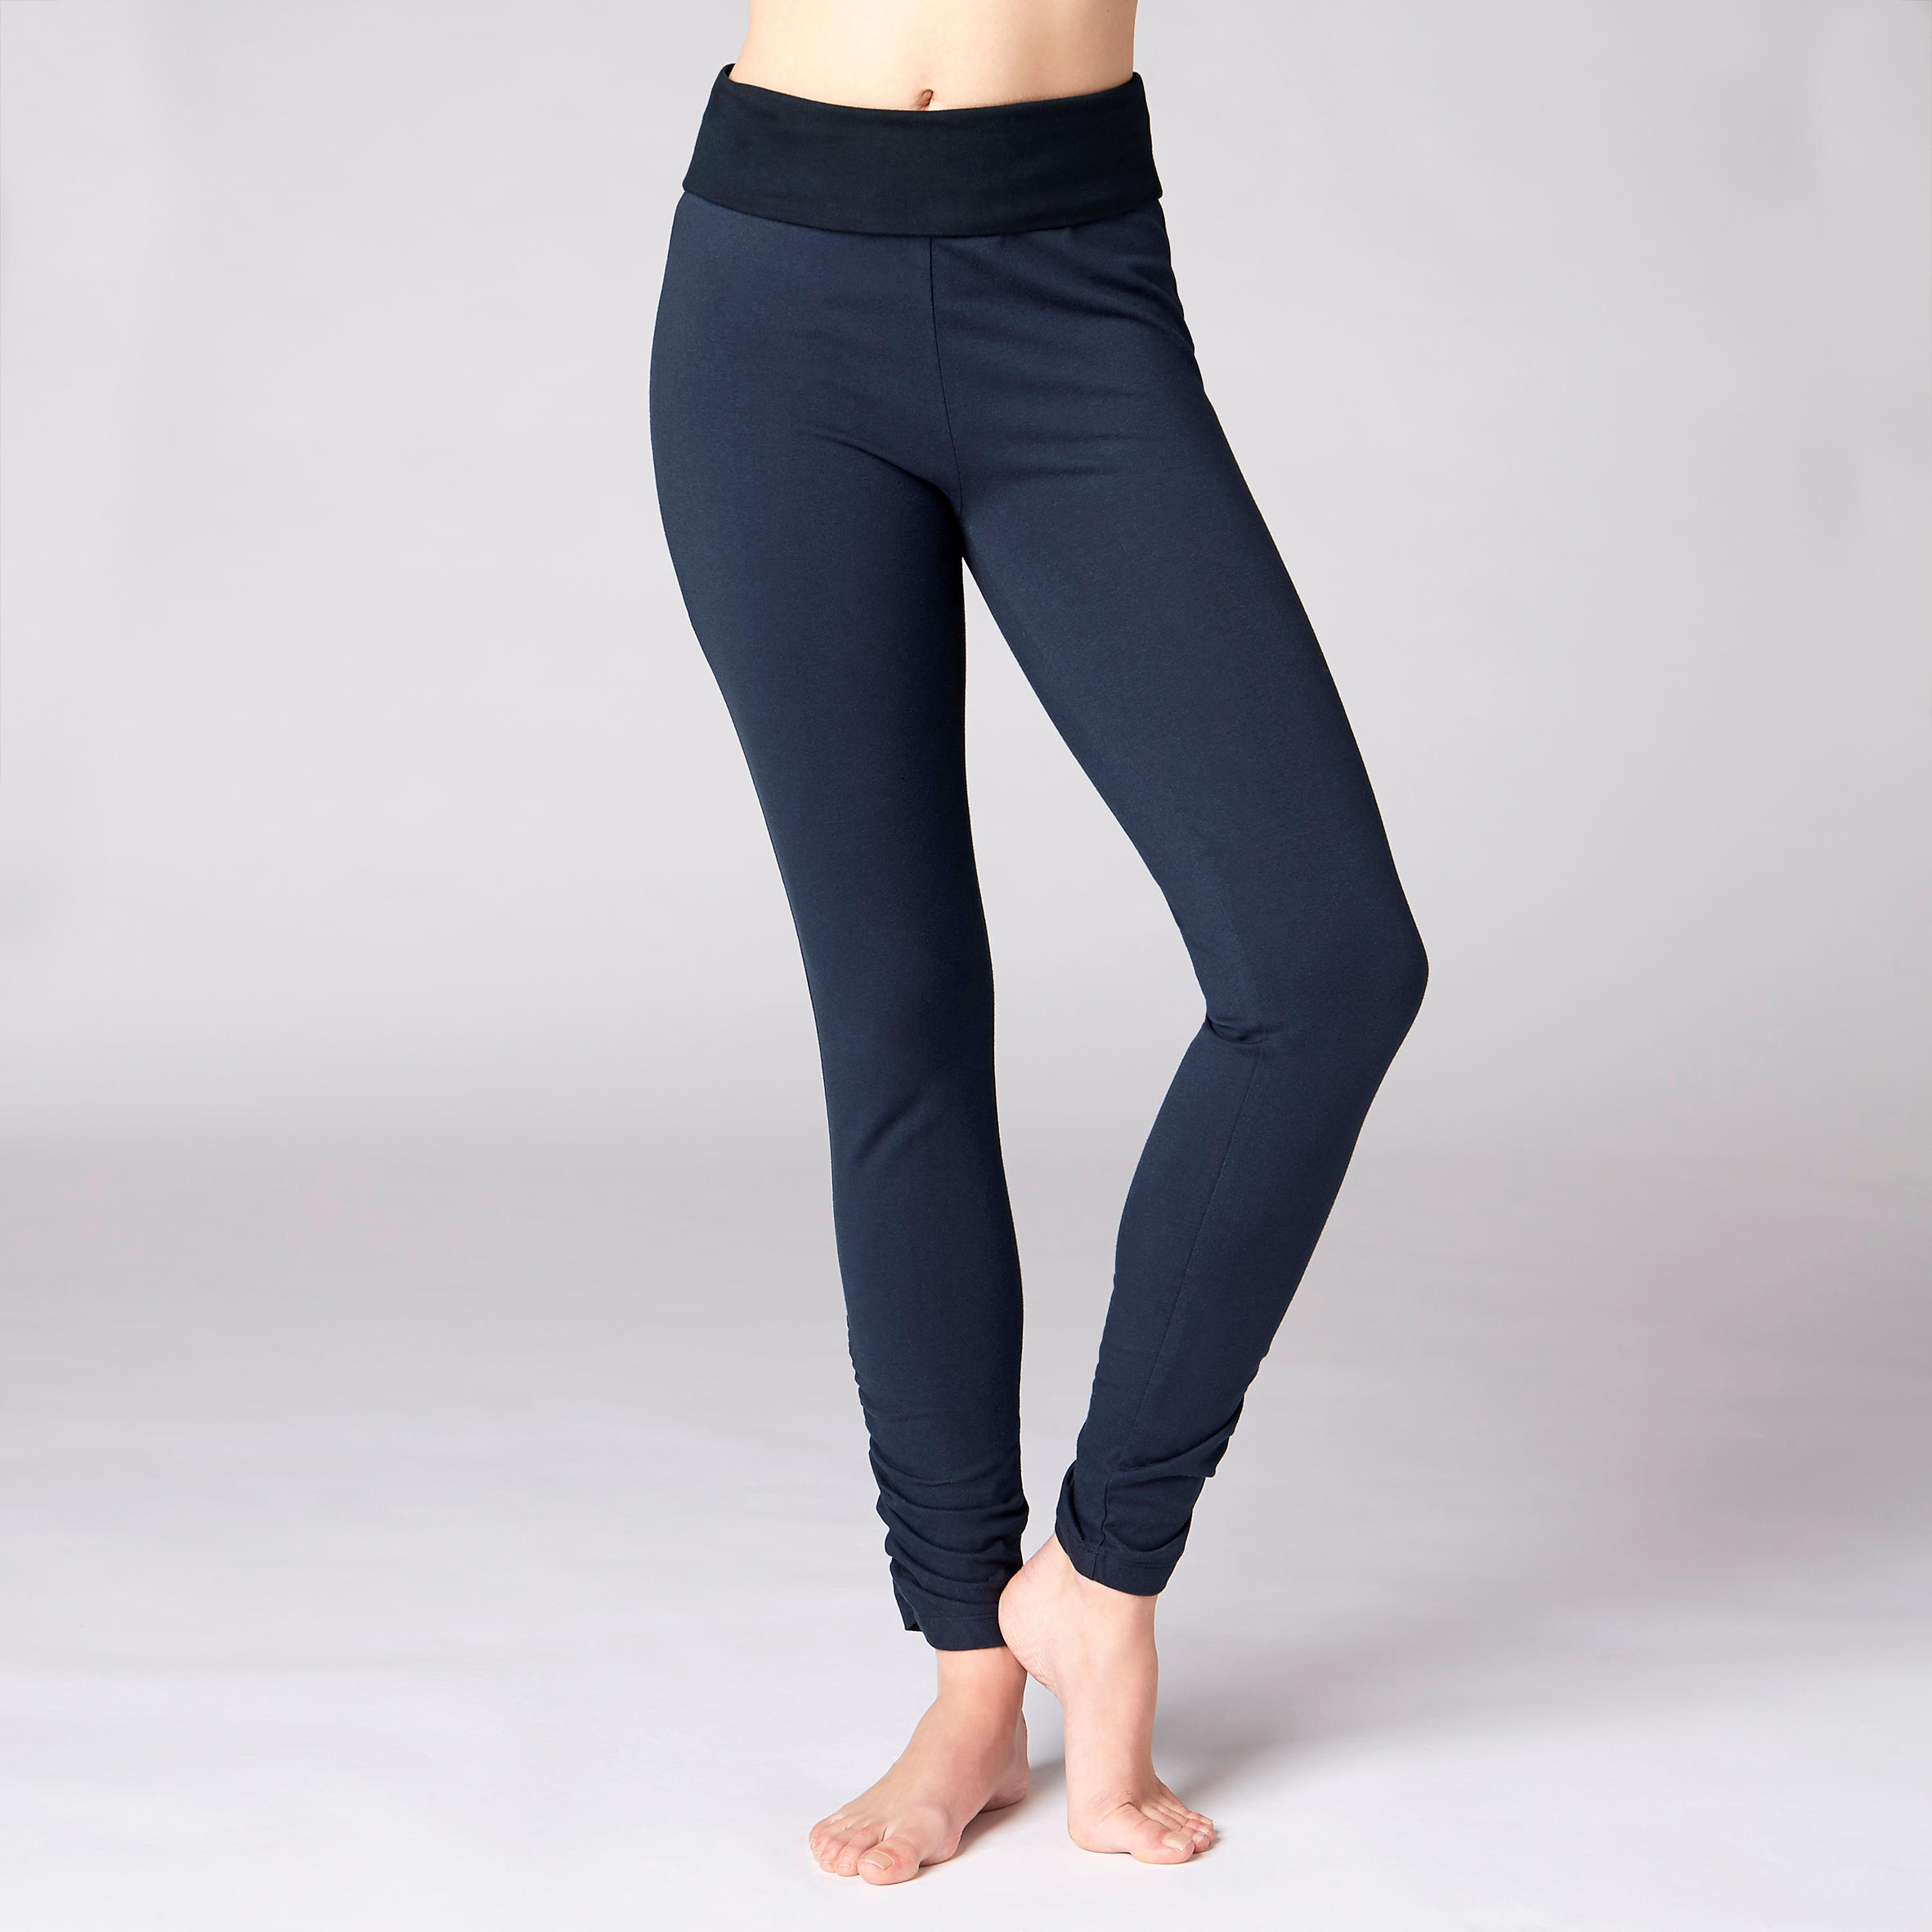 Shop Organic Cotton Yoga Pants for Women  High Waist With Pockets  Proyog